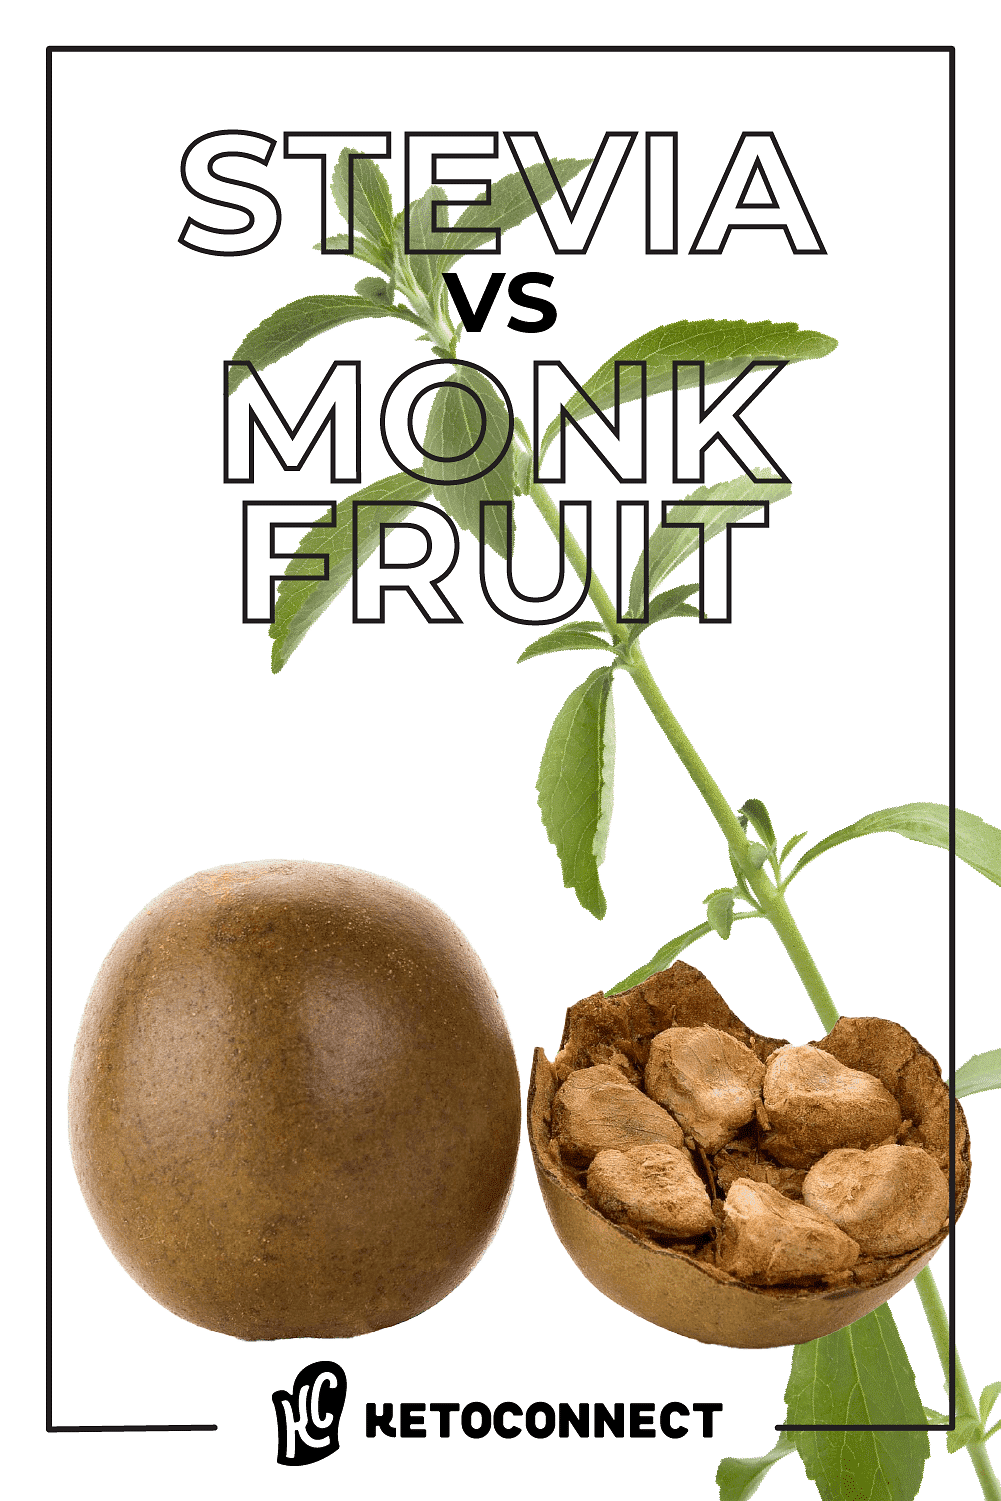 Stevia Vs Monk Fruit: qual è per Keto?